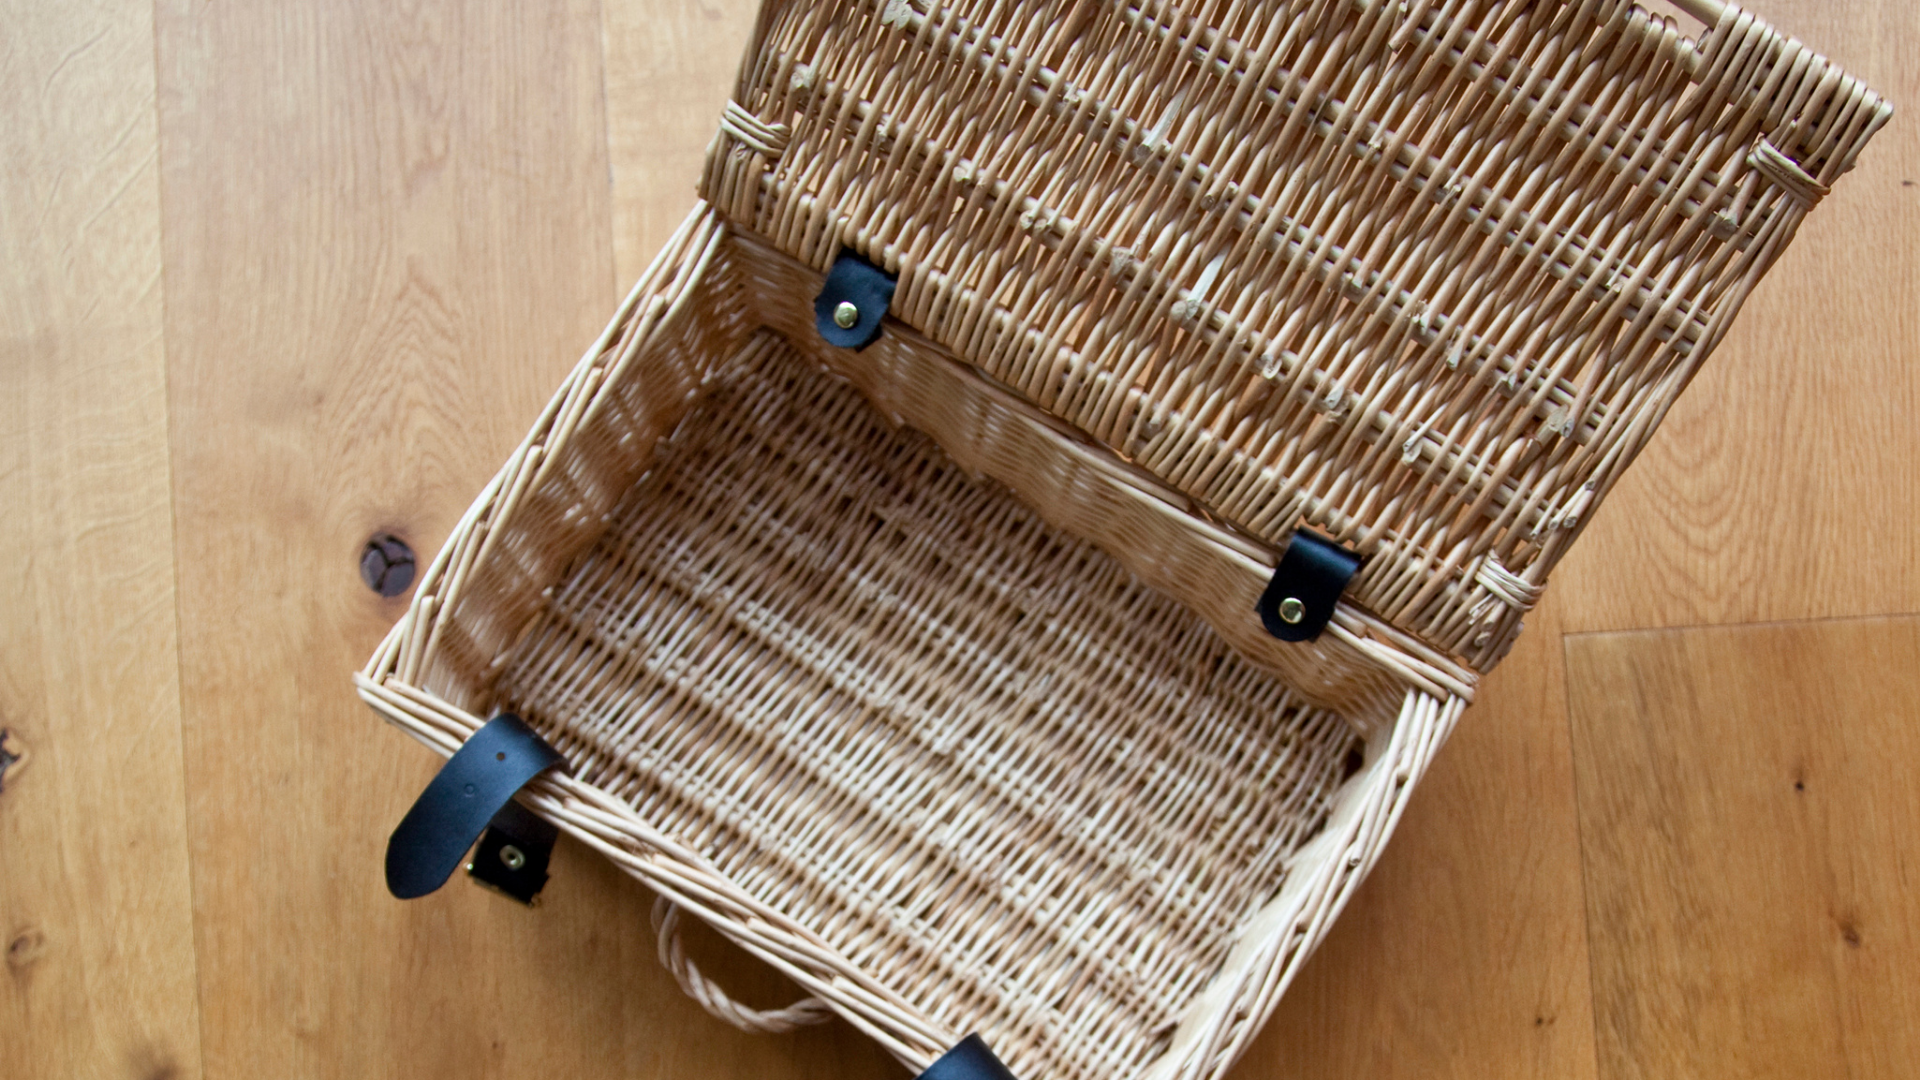 Open and empty wicker basket with lid on wooden floor